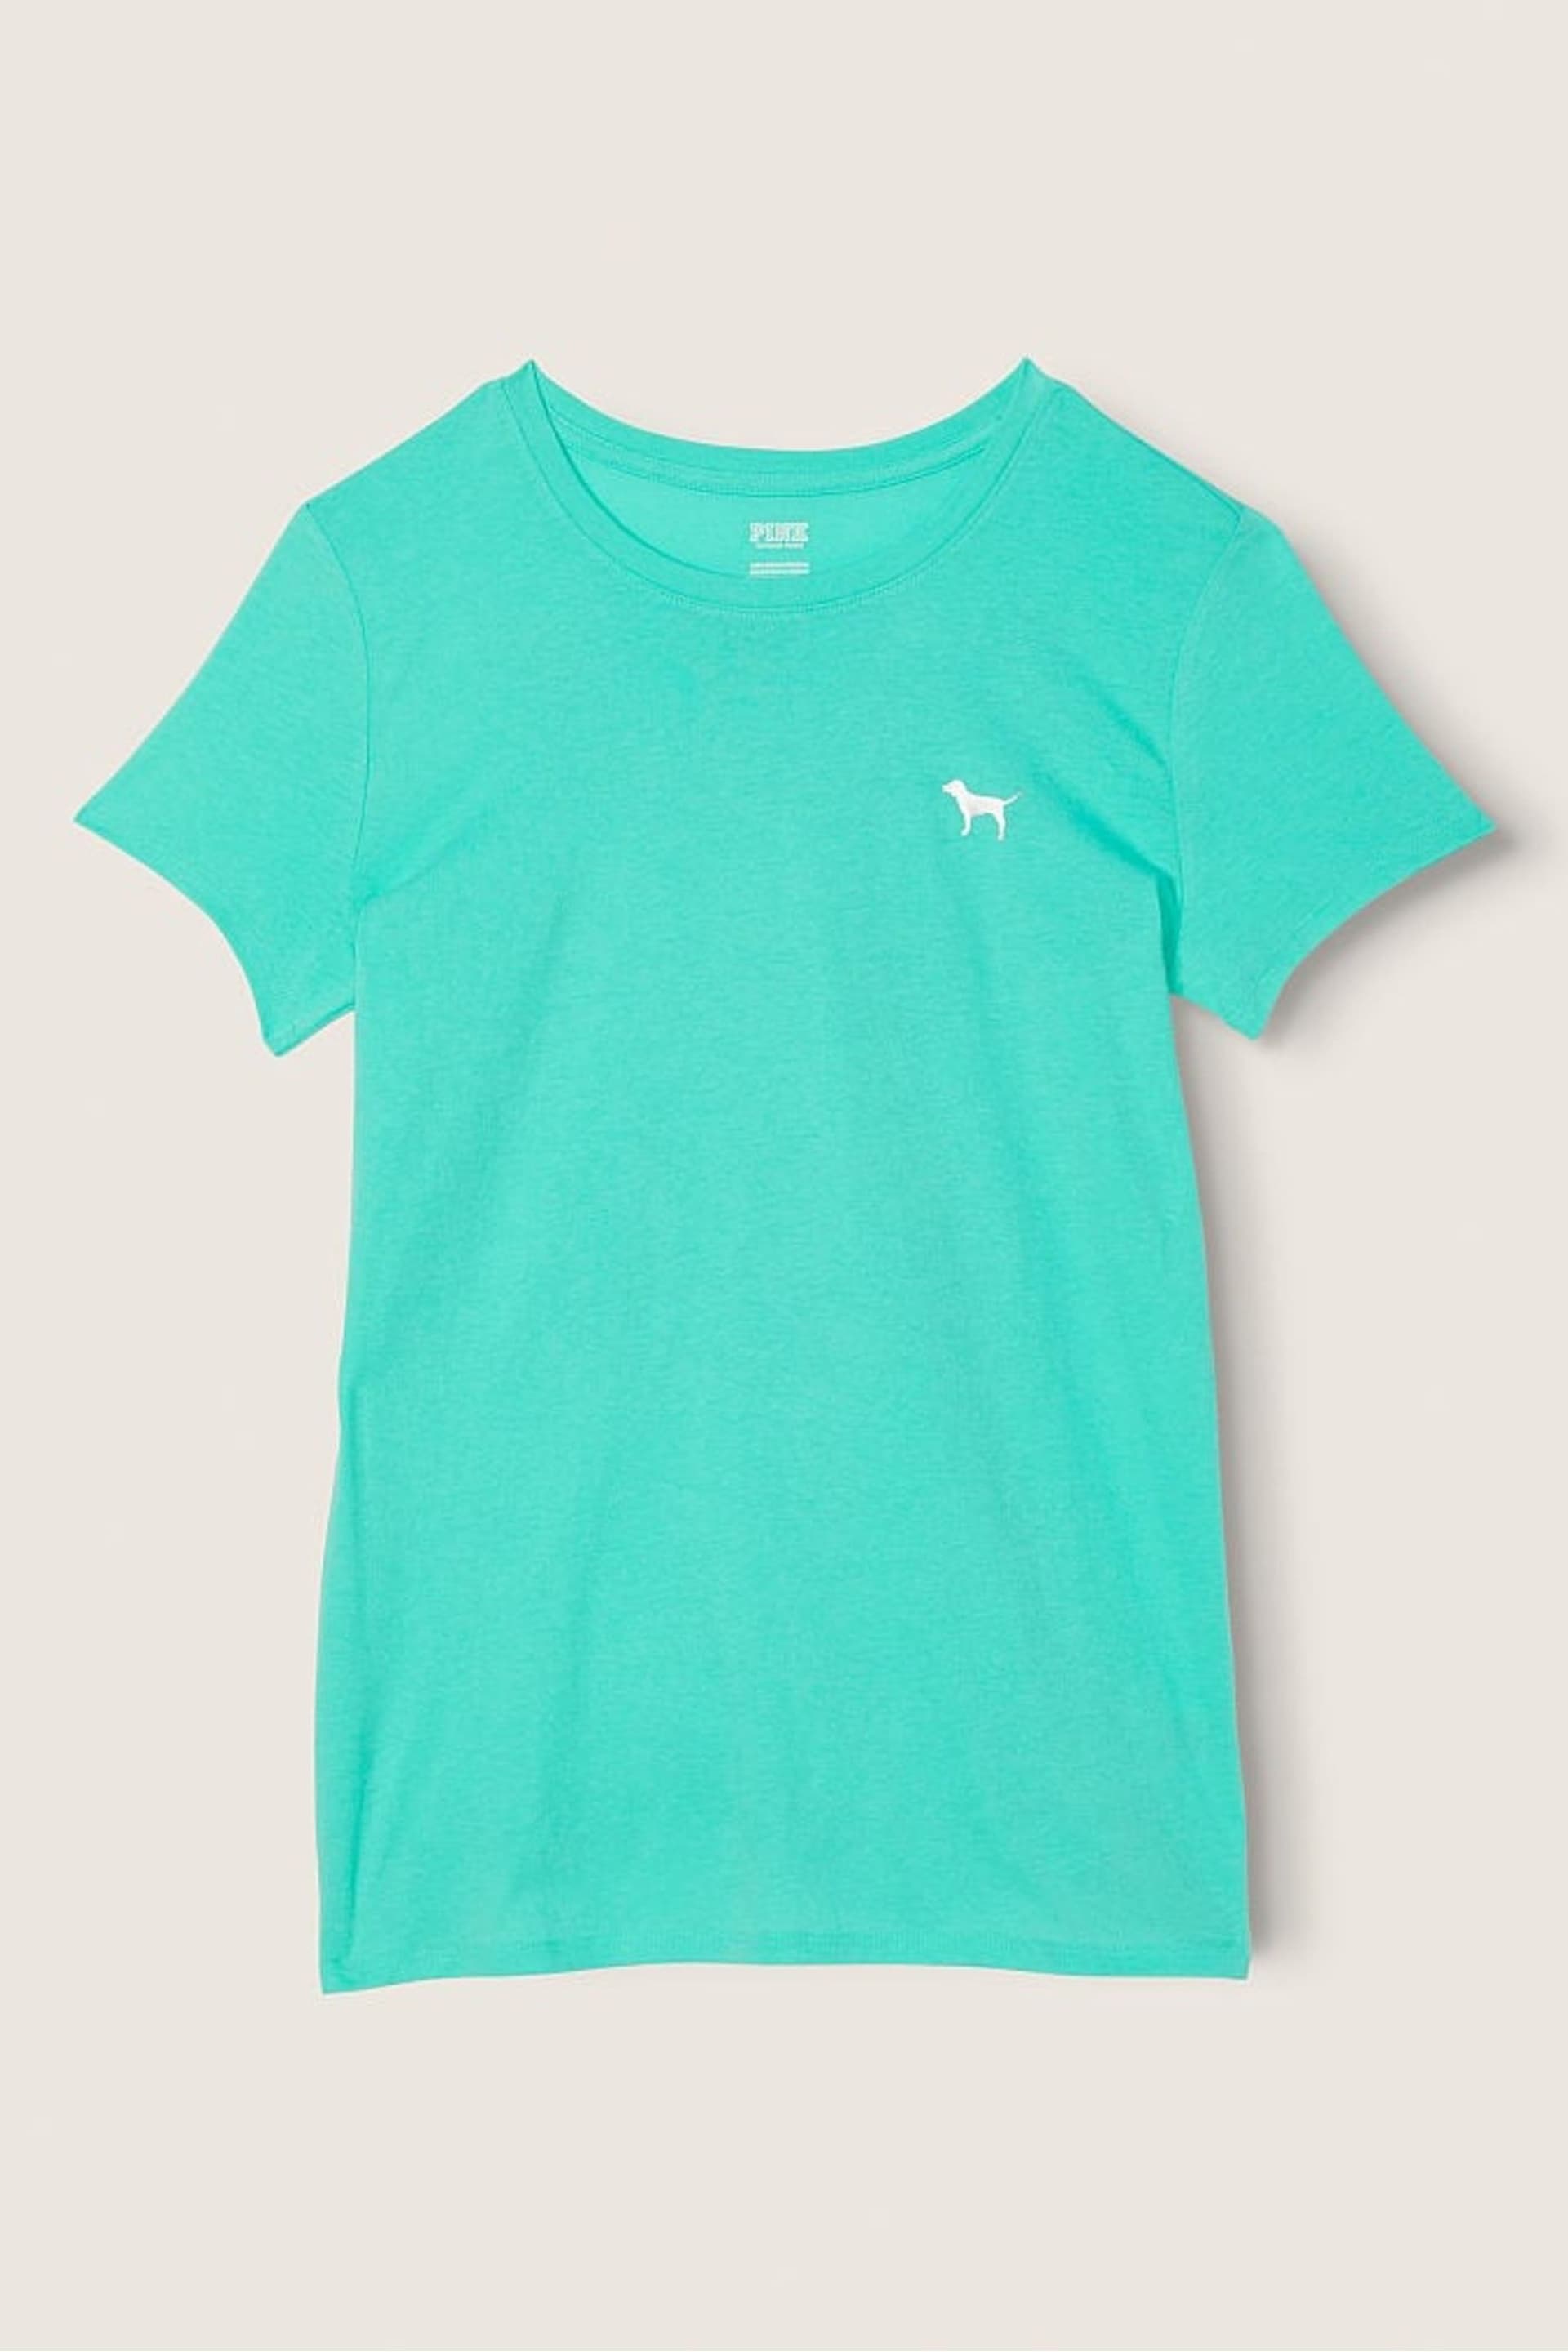 Victoria's Secret PINK Blue Teal Ice Logo Short Sleeve T-Shirt - Image 4 of 5